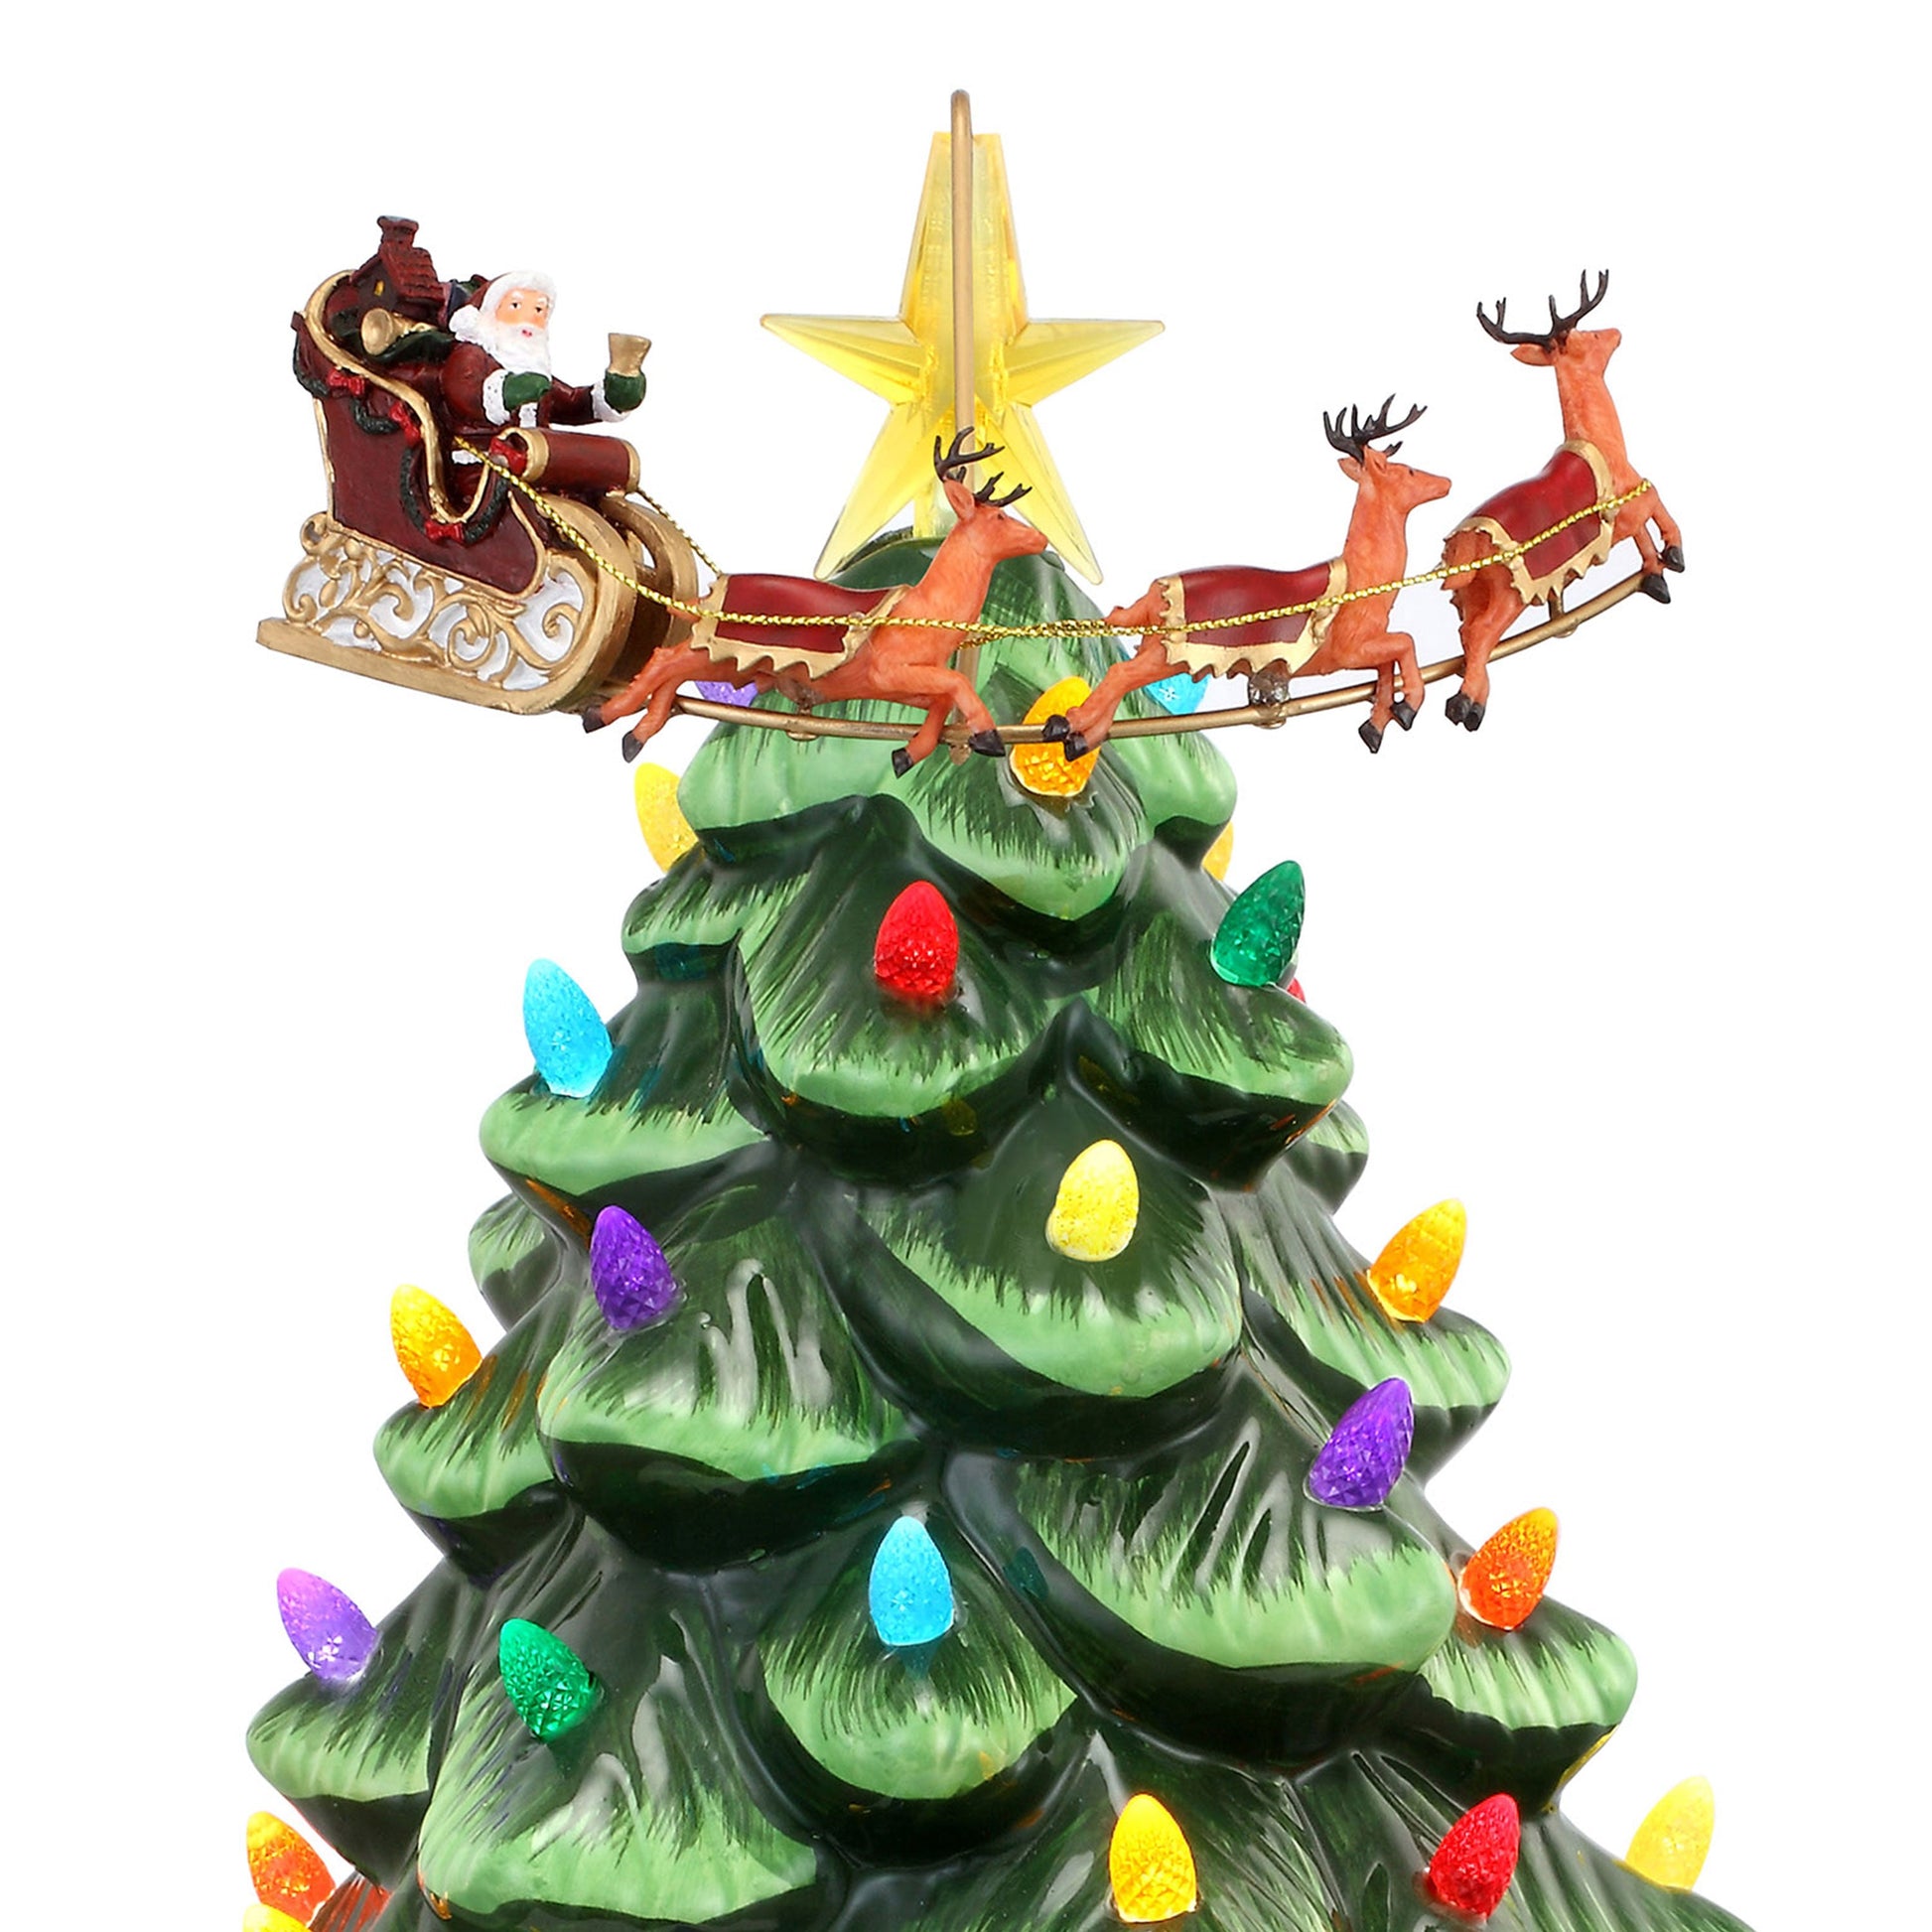 14" Animated Nostalgic Ceramic Tree - Santa's Sleigh - Mr. Christmas